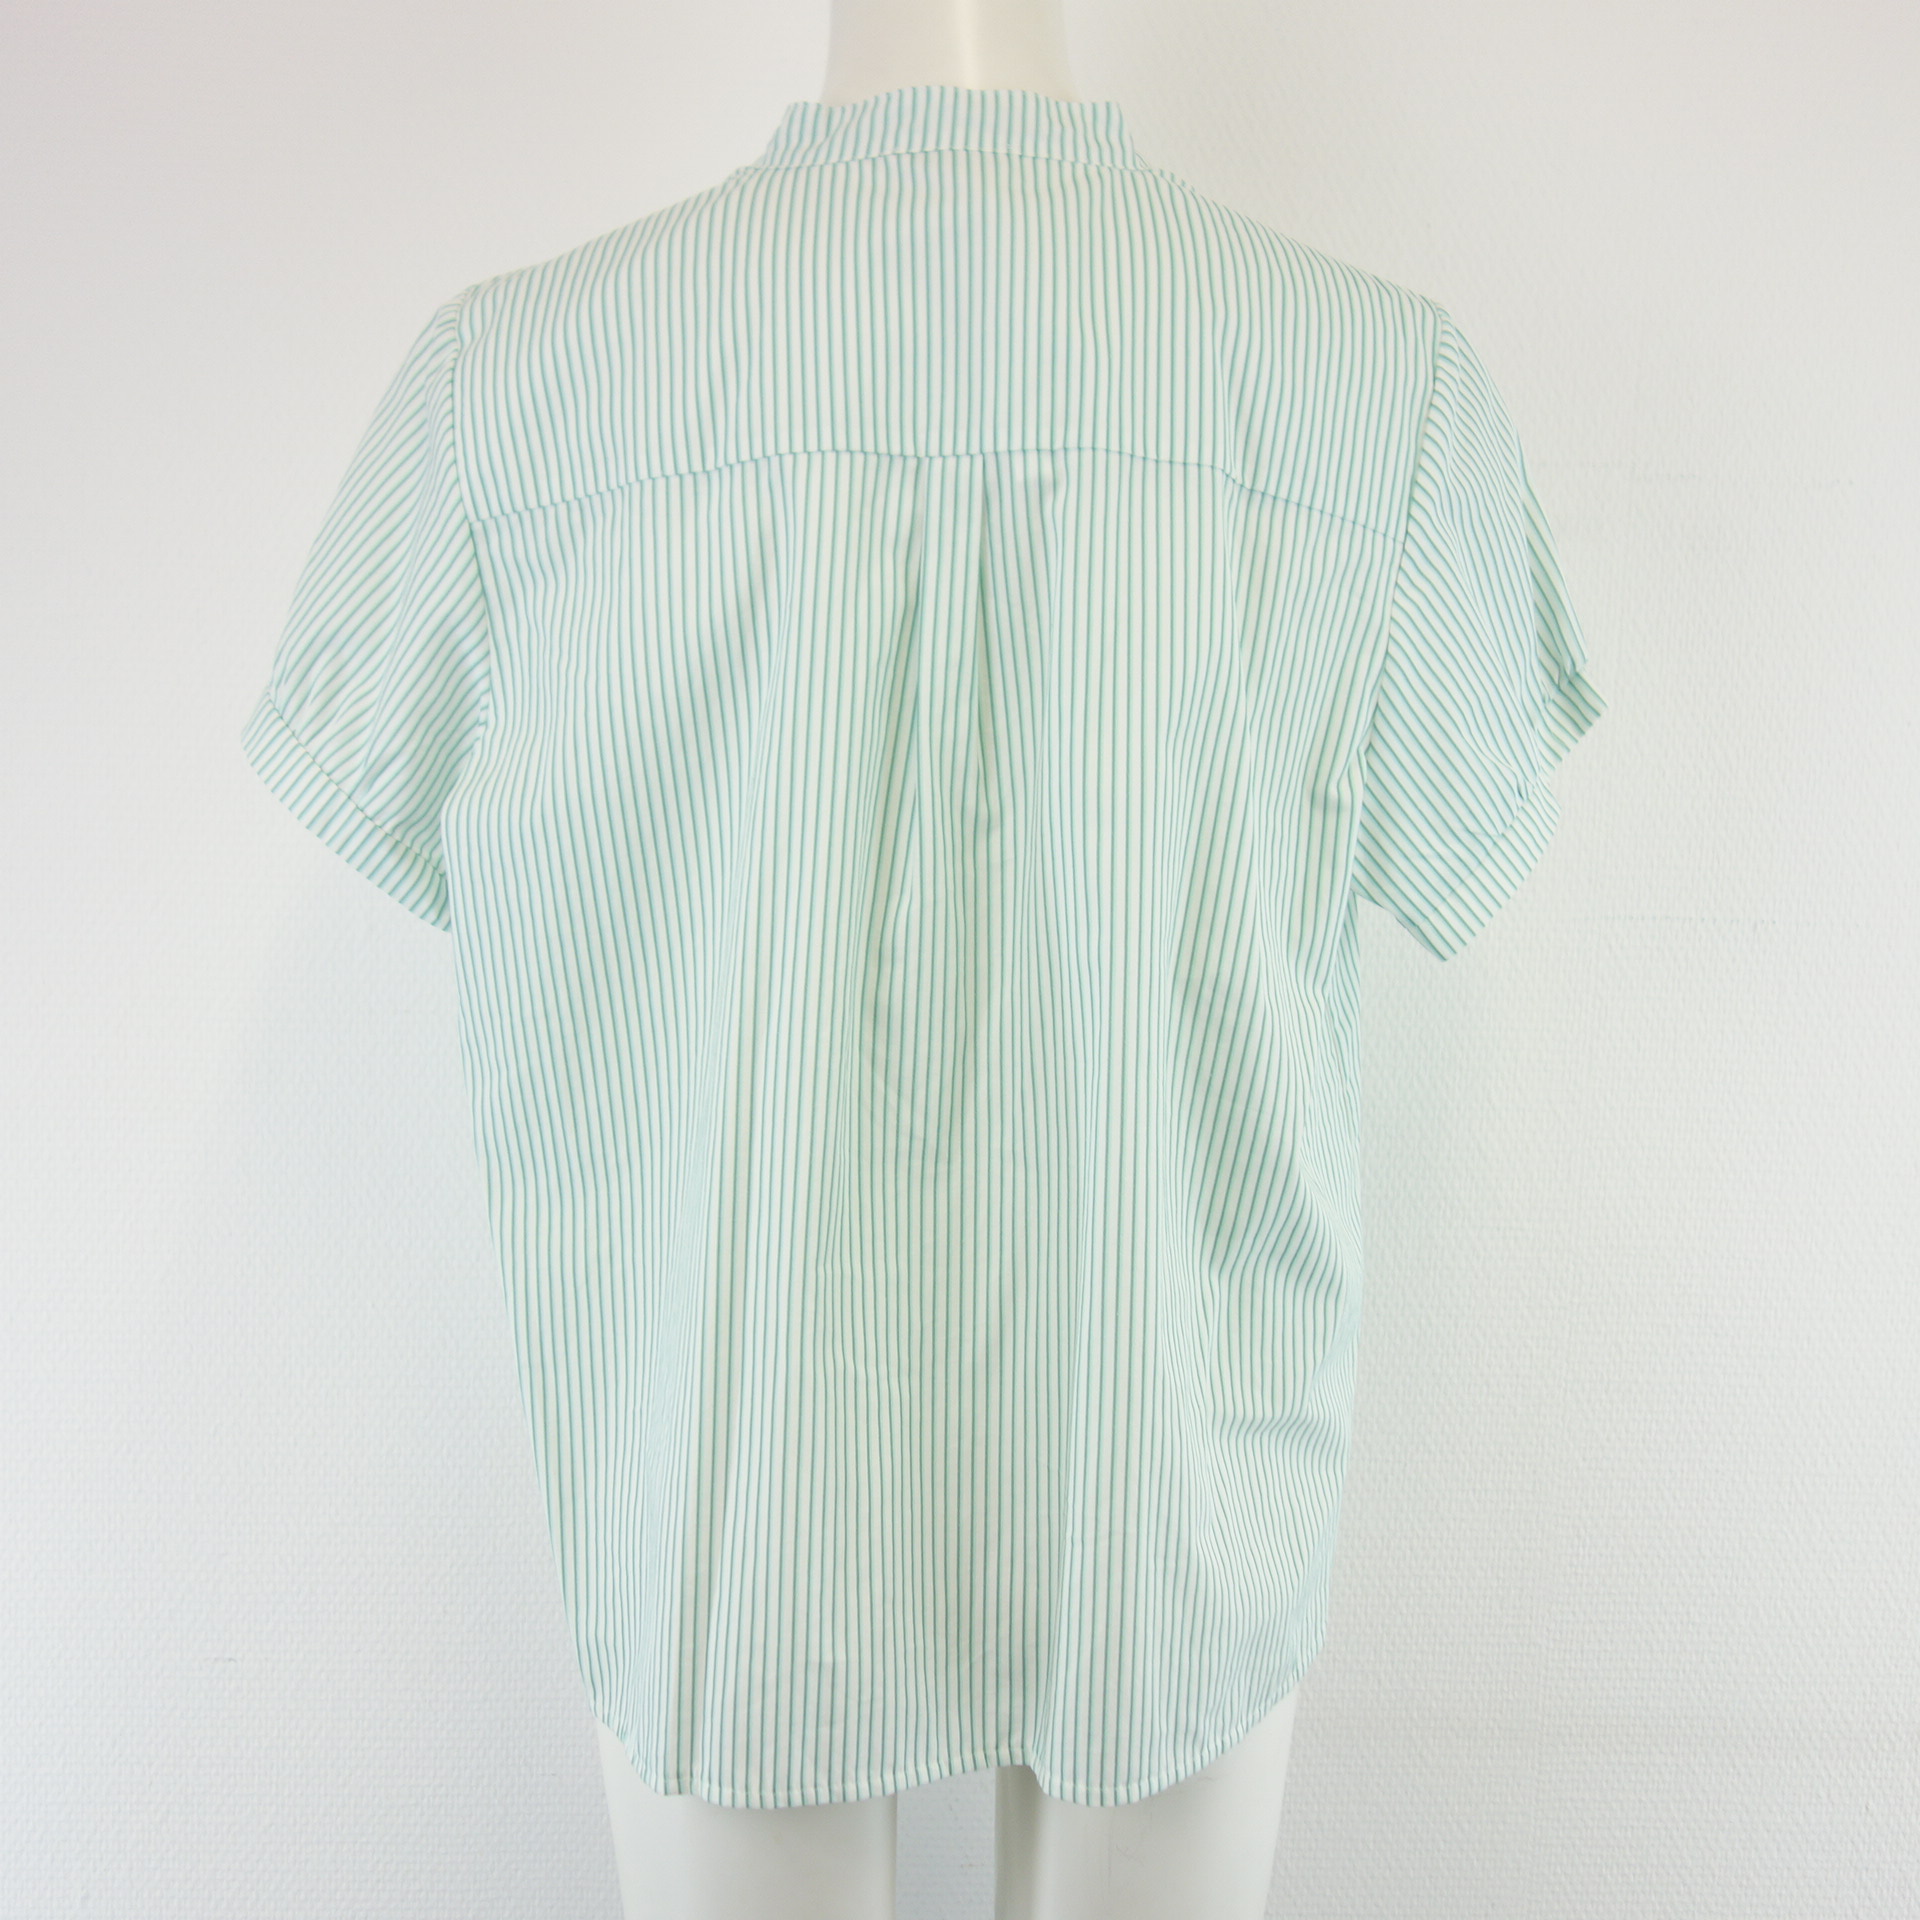 TIFFANY Dänemark Damen Bluse Hemd Tunika Shirt Weiß Grün Baumwolle Größe S / M